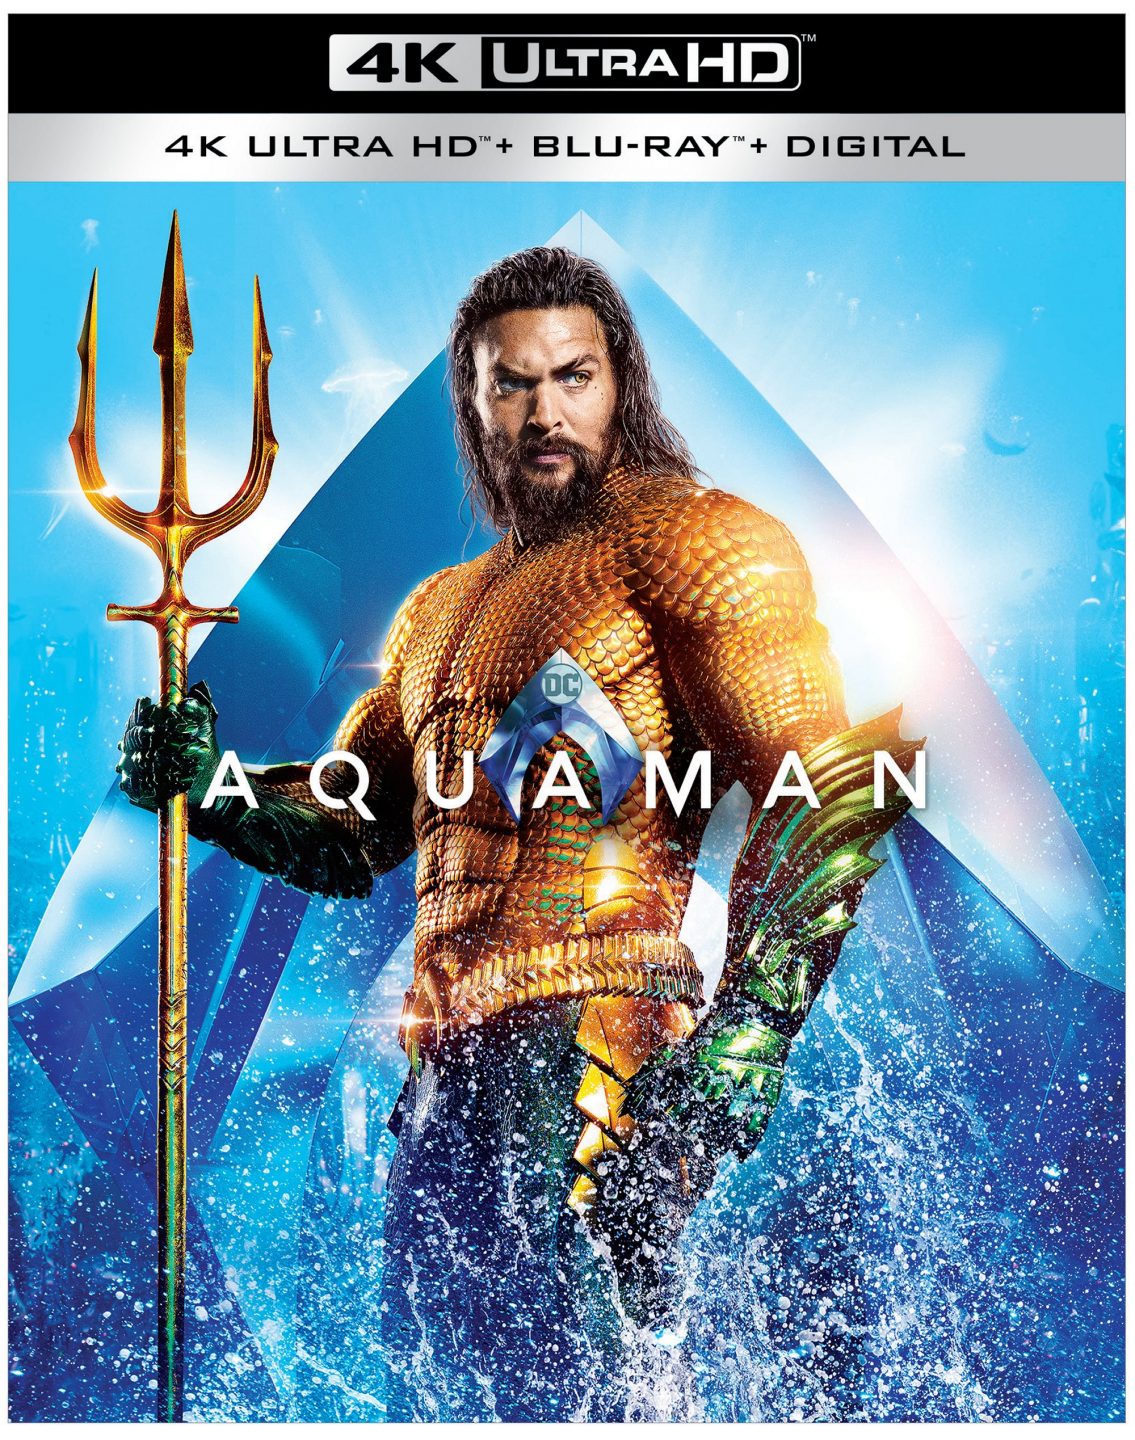 Aquaman 4K Ultra HD cover (Warner Bros. Home Entertainment)